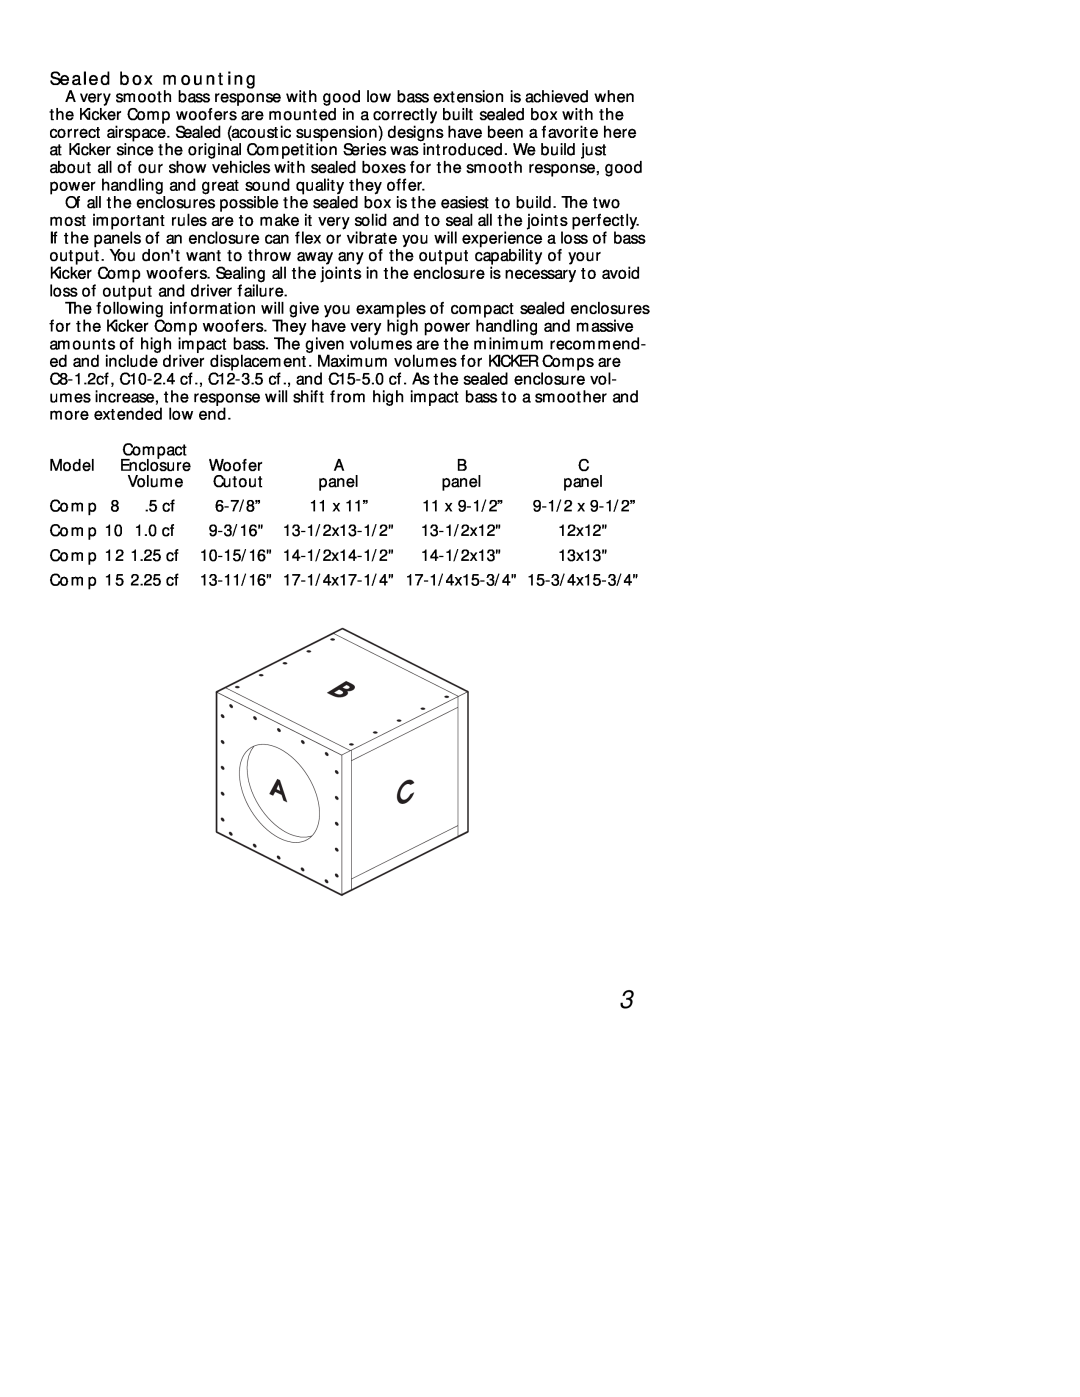 Kicker 10TC104 manual Sealed box mounting, Comp 8 .5 cf, Comp 10 1.0 cf, Comp 12 1.25 cf, Comp 15 2.25 cf 